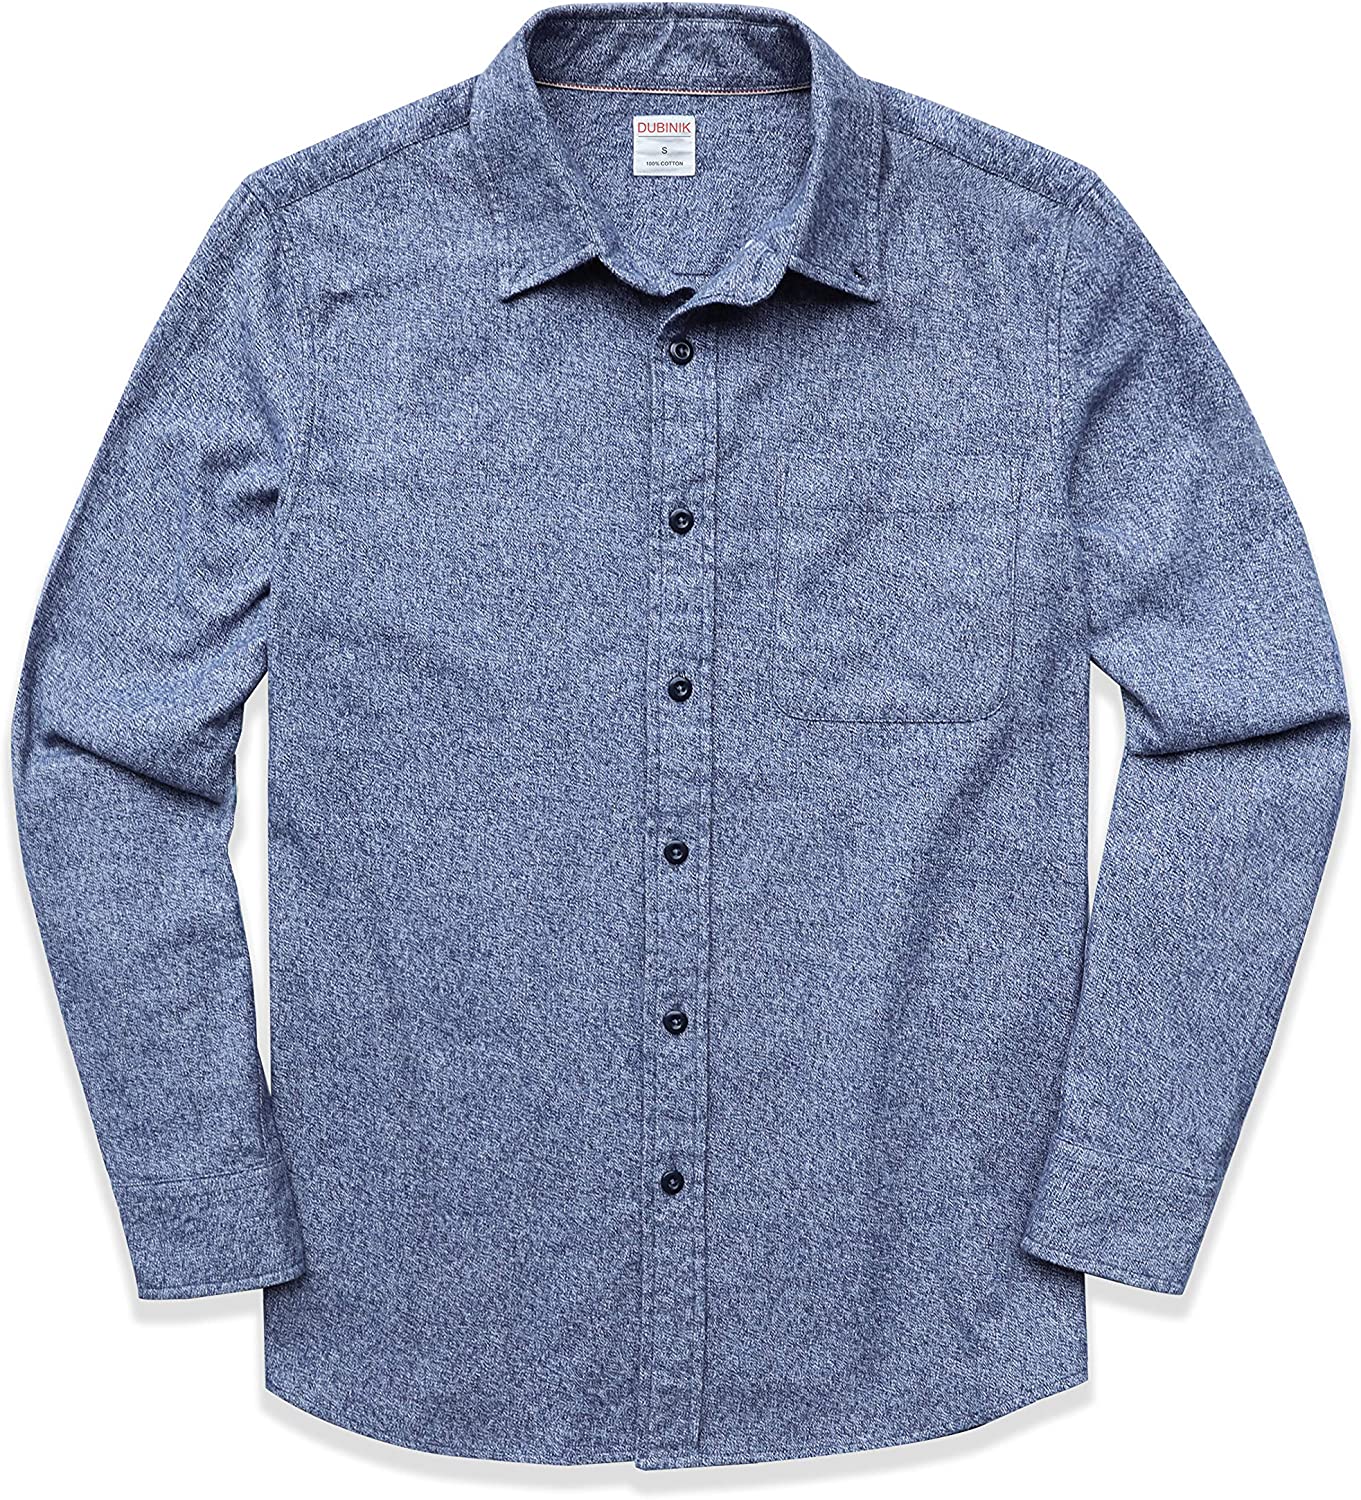 Dubinik Mens Plaid Long Sleeve Casual Button-Down Shirts 100% Cotton Easy Care Regular Fit